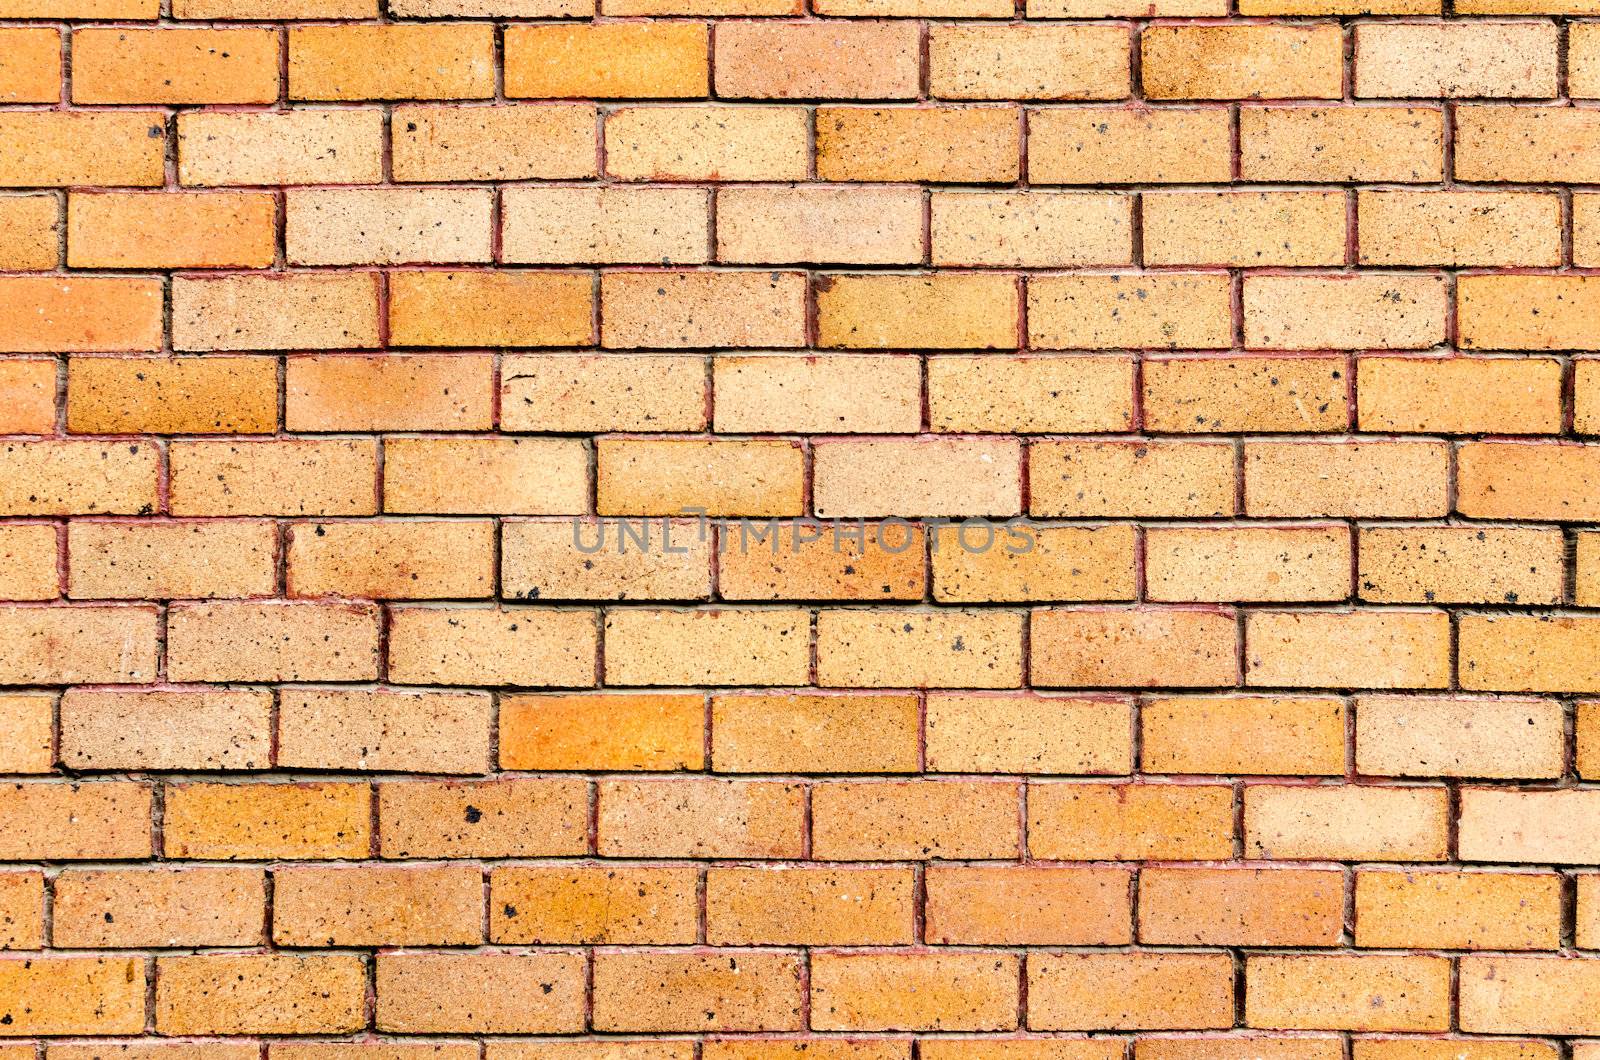 High resolution texture of brick wall.